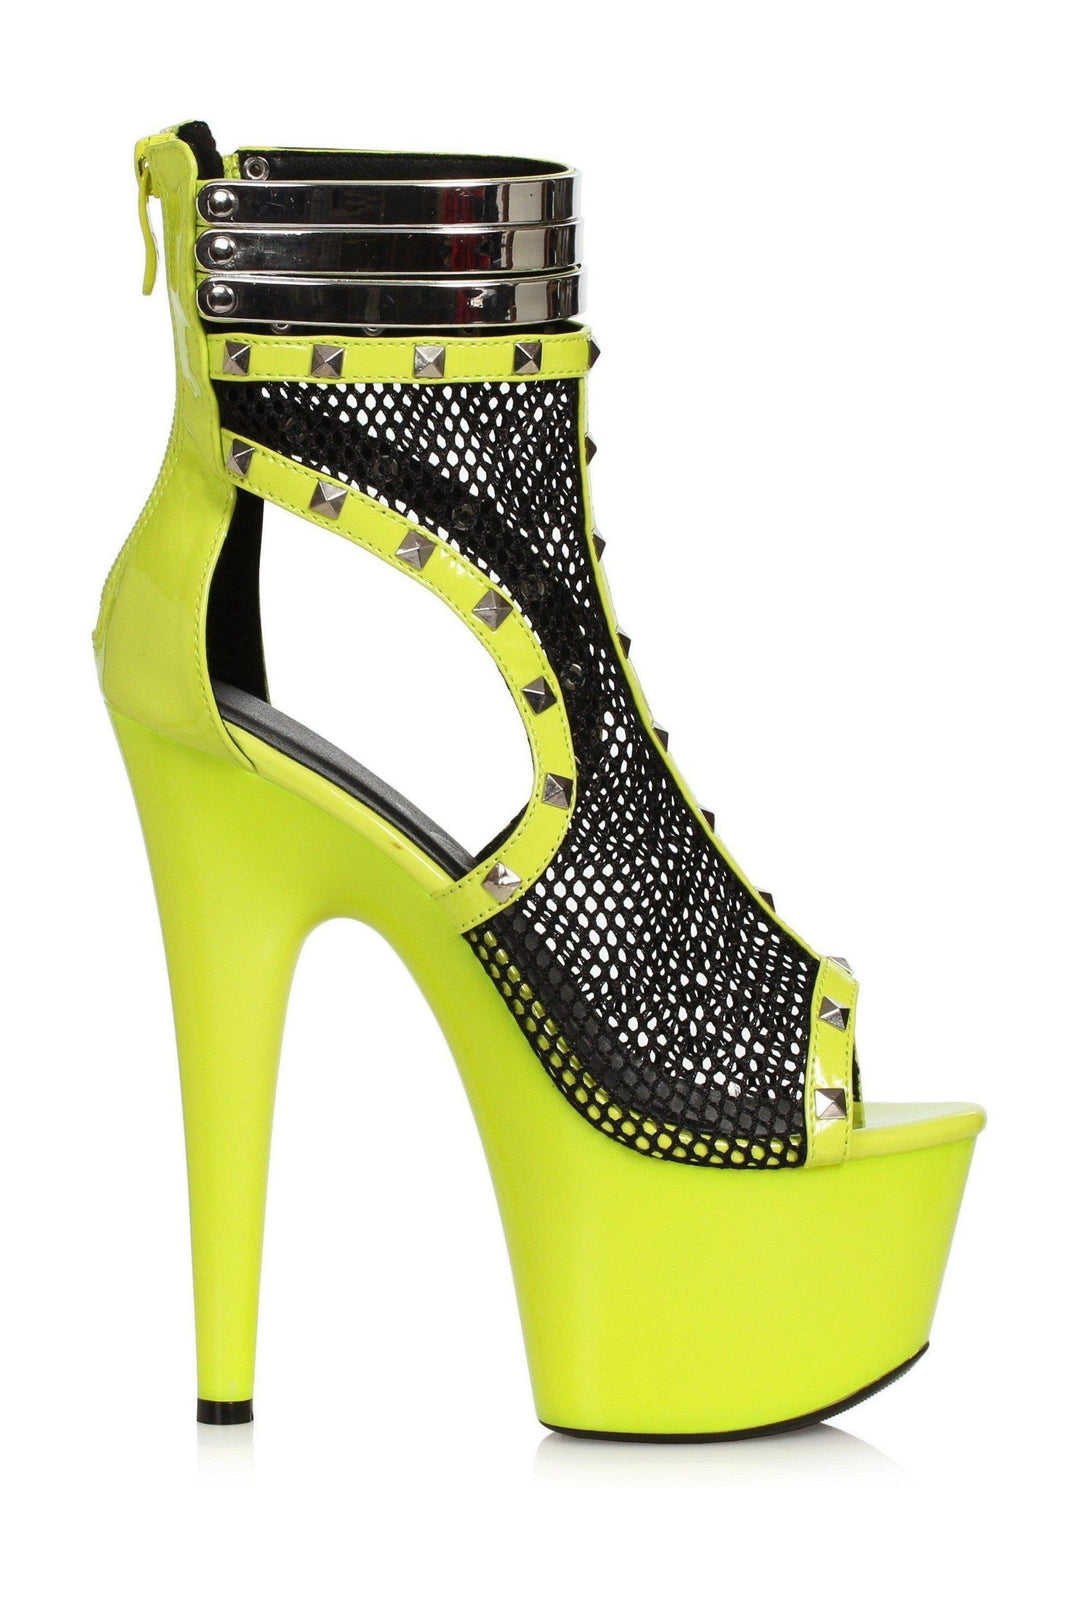 Ellie Shoes Yellow Sandals Platform Stripper Shoes | Buy at Sexyshoes.com